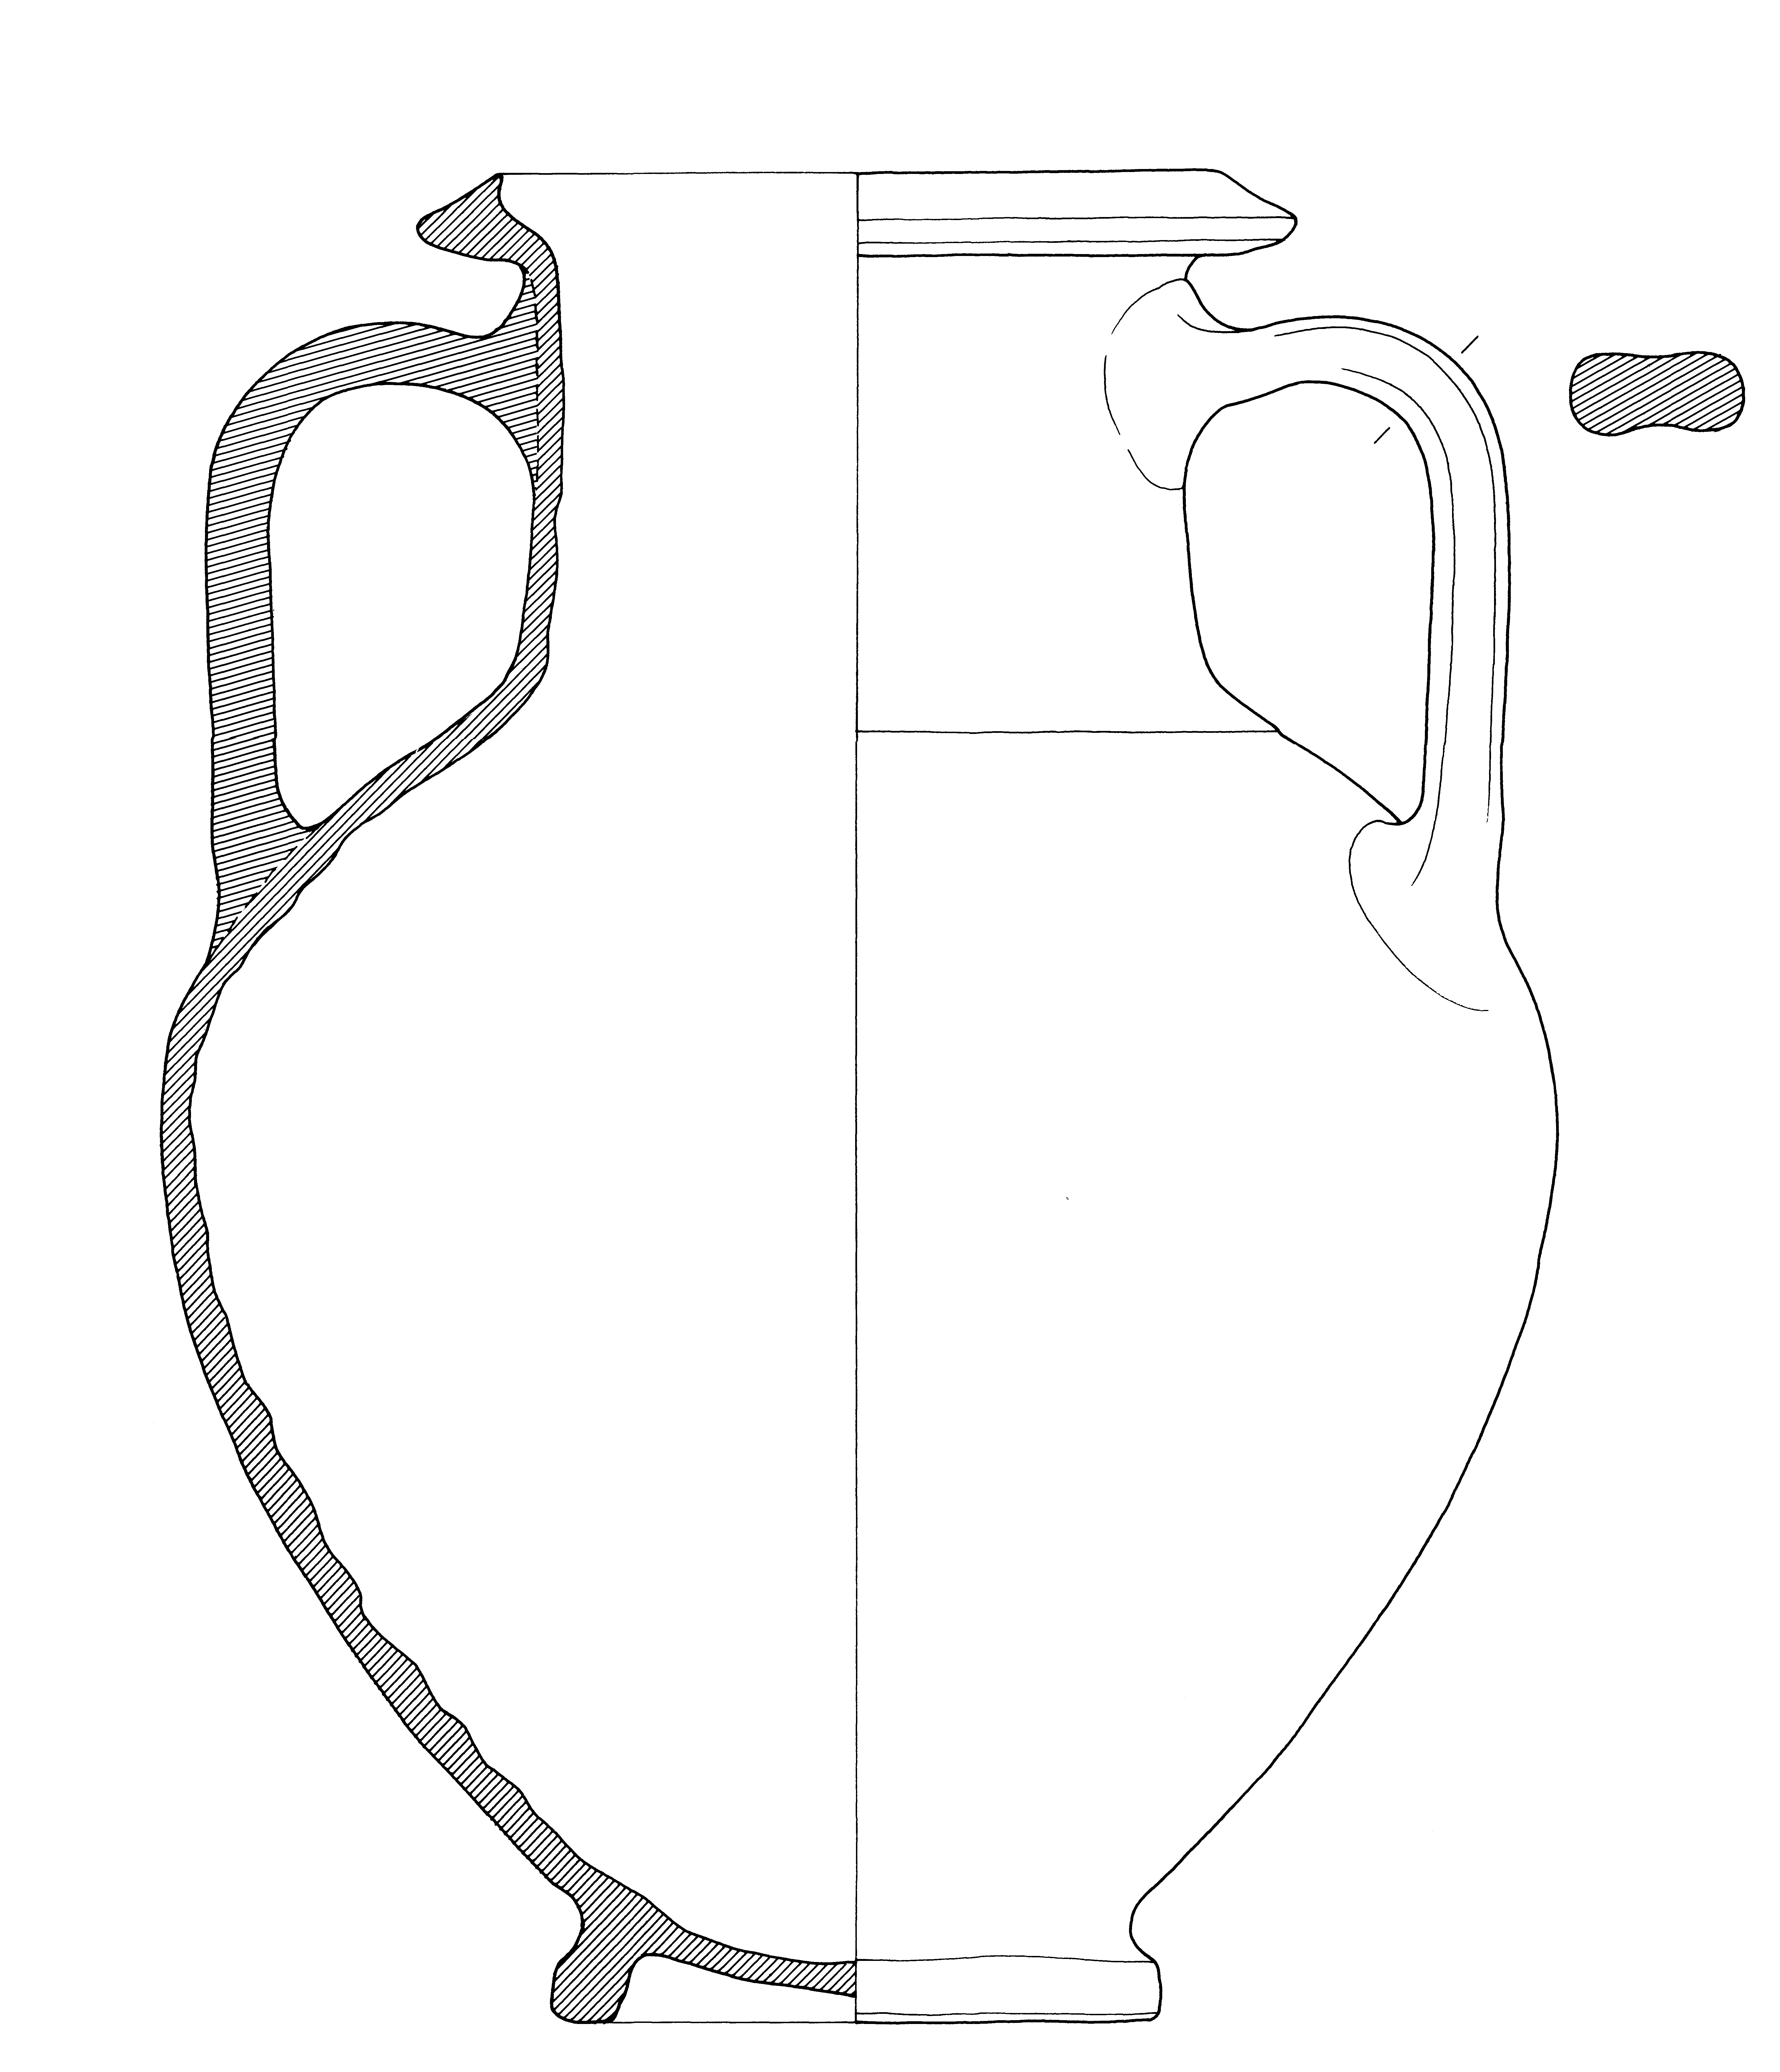 anfora, cineraria (fine/primo quarto IV-III a.C)